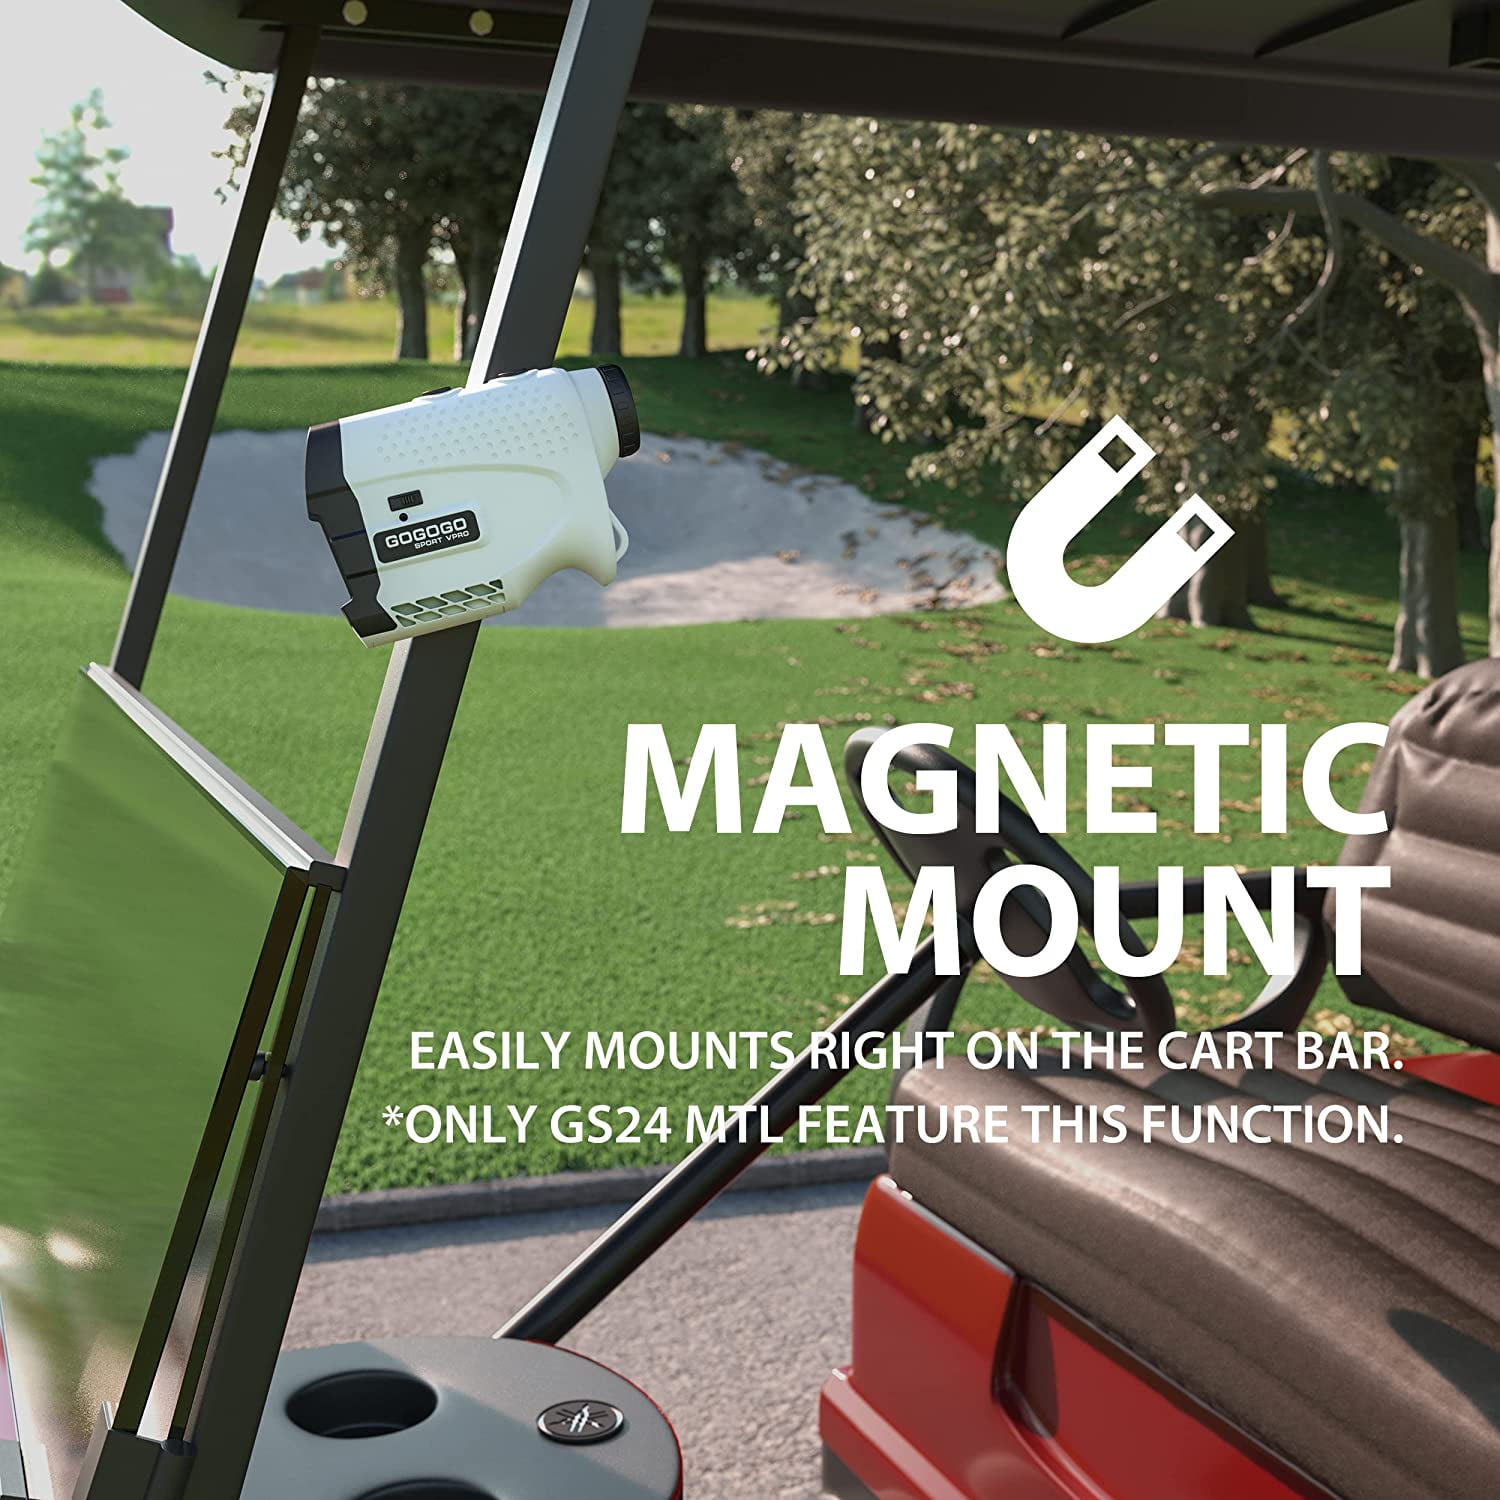  Gogogo Sport Vpro Laser Golf/Hunting Rangefinder, 6X  Magnification Clear View 650/1200 Yards Laser Range Finder, Lightweight,  Slope, Pin-Seeker & Flag-Lock & Vibration (650 Yard) : Sports & Outdoors